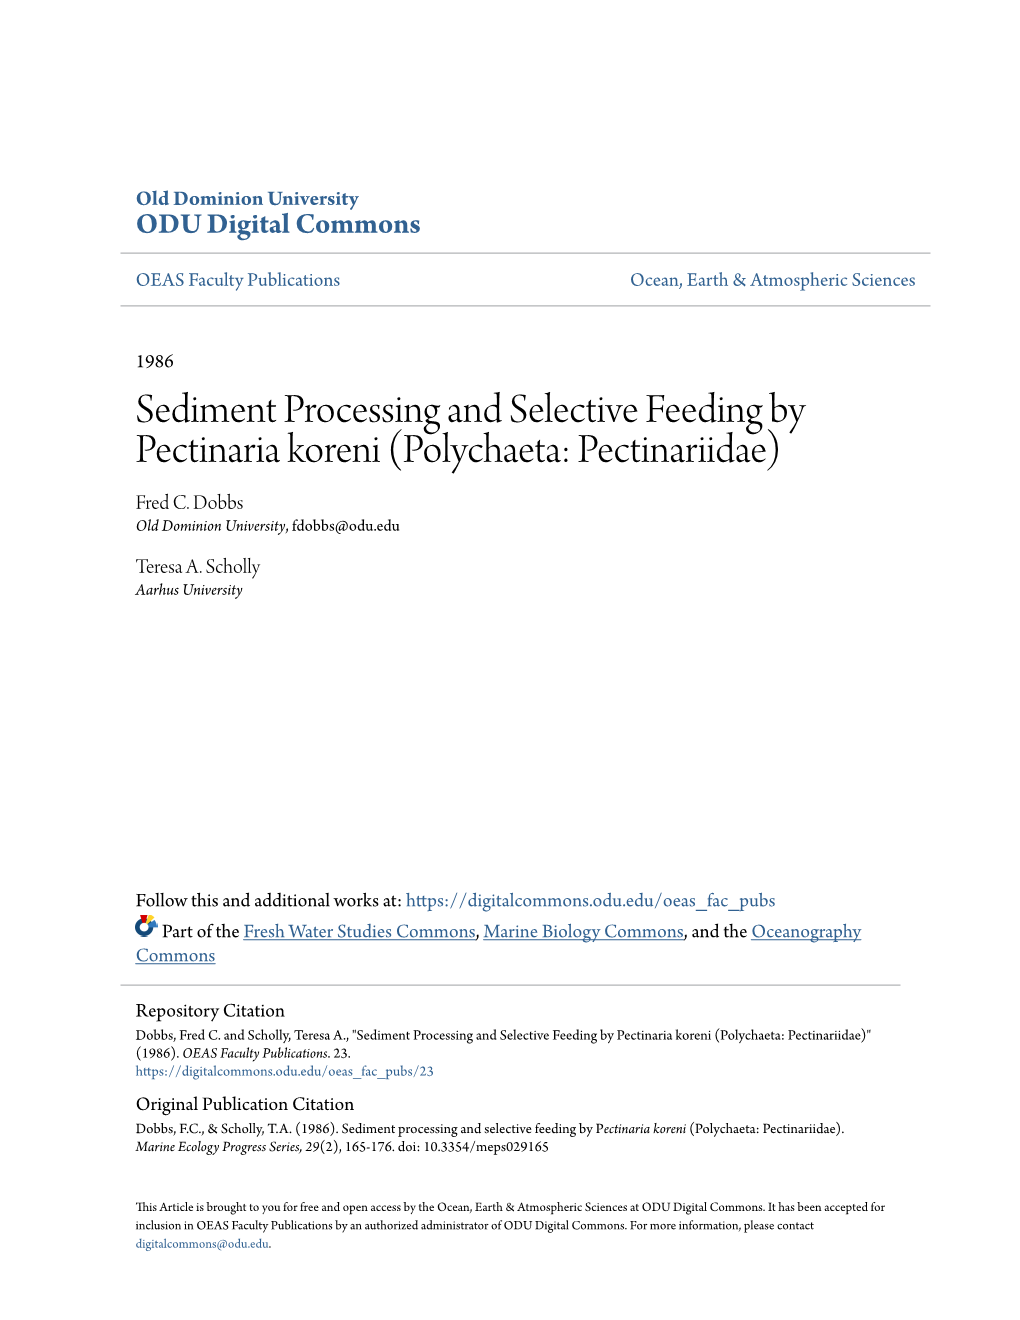 Sediment Processing and Selective Feeding by Pectinaria Koreni (Polychaeta: Pectinariidae) Fred C